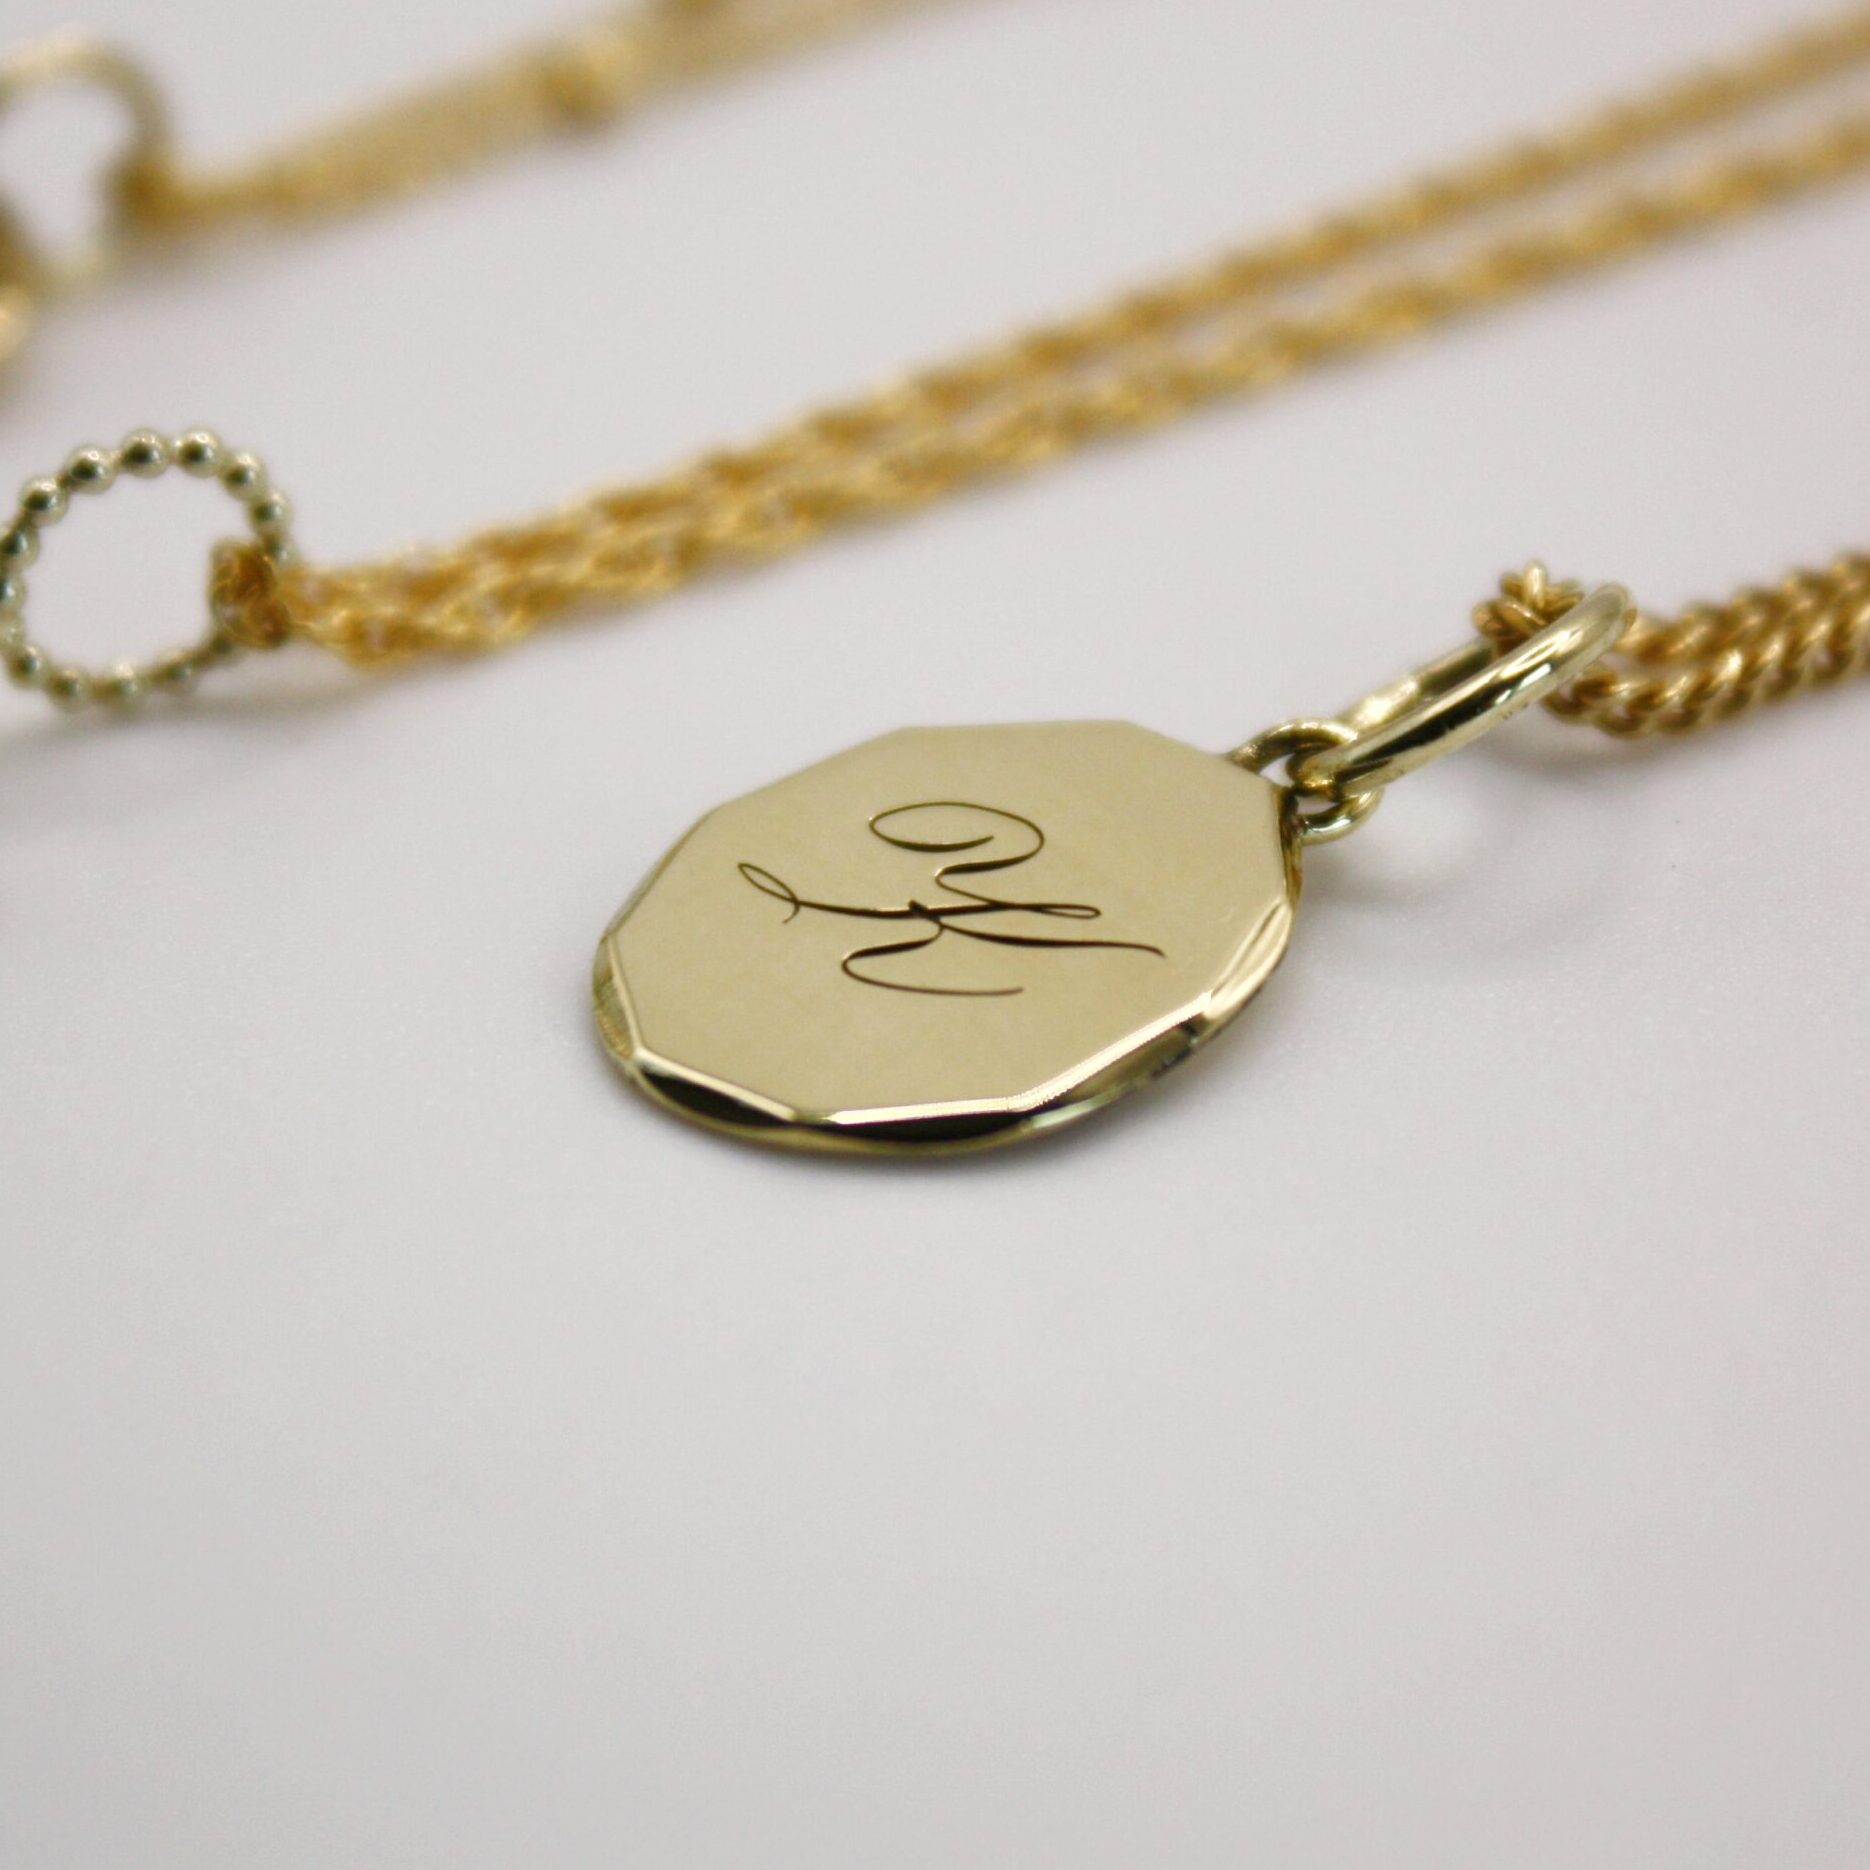 Handmade Calligraphy Charm 14k - Personalized pendant